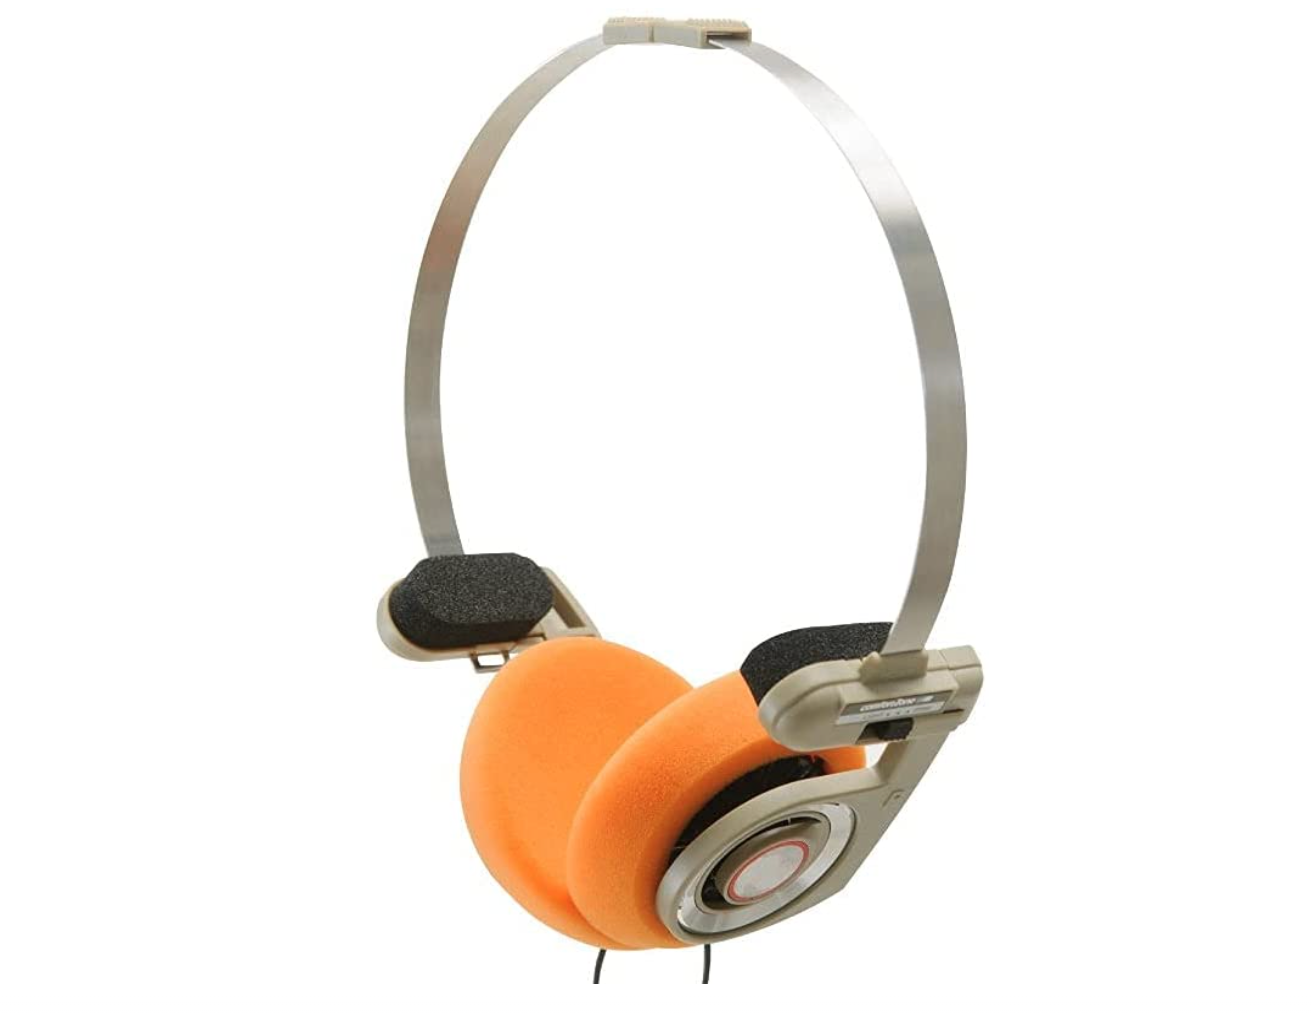 Koss Porta Pro Vintage Headphones Review 2022